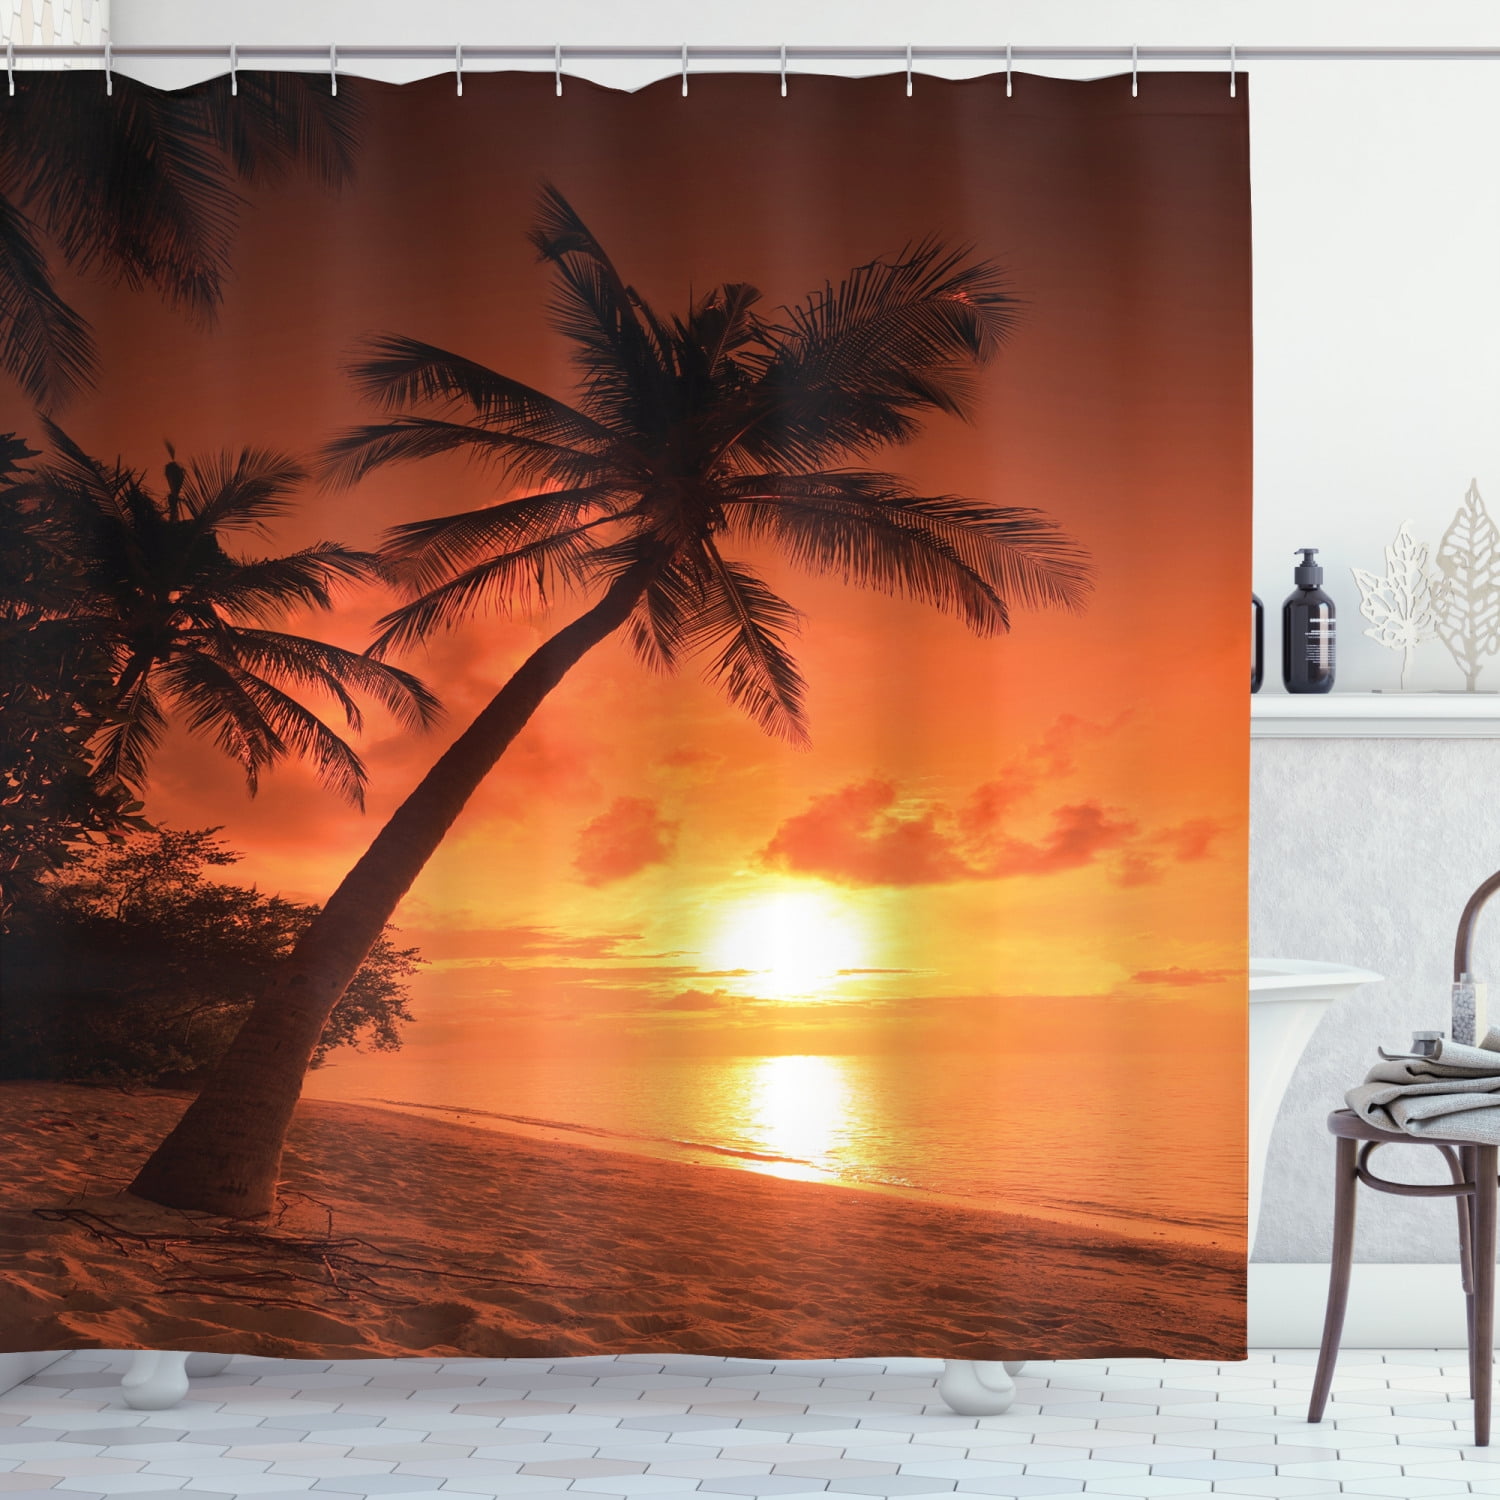 72" Tropical Beach Blue Sea Sunset Waterproof Fabric Bathroom Shower Curtain Set 